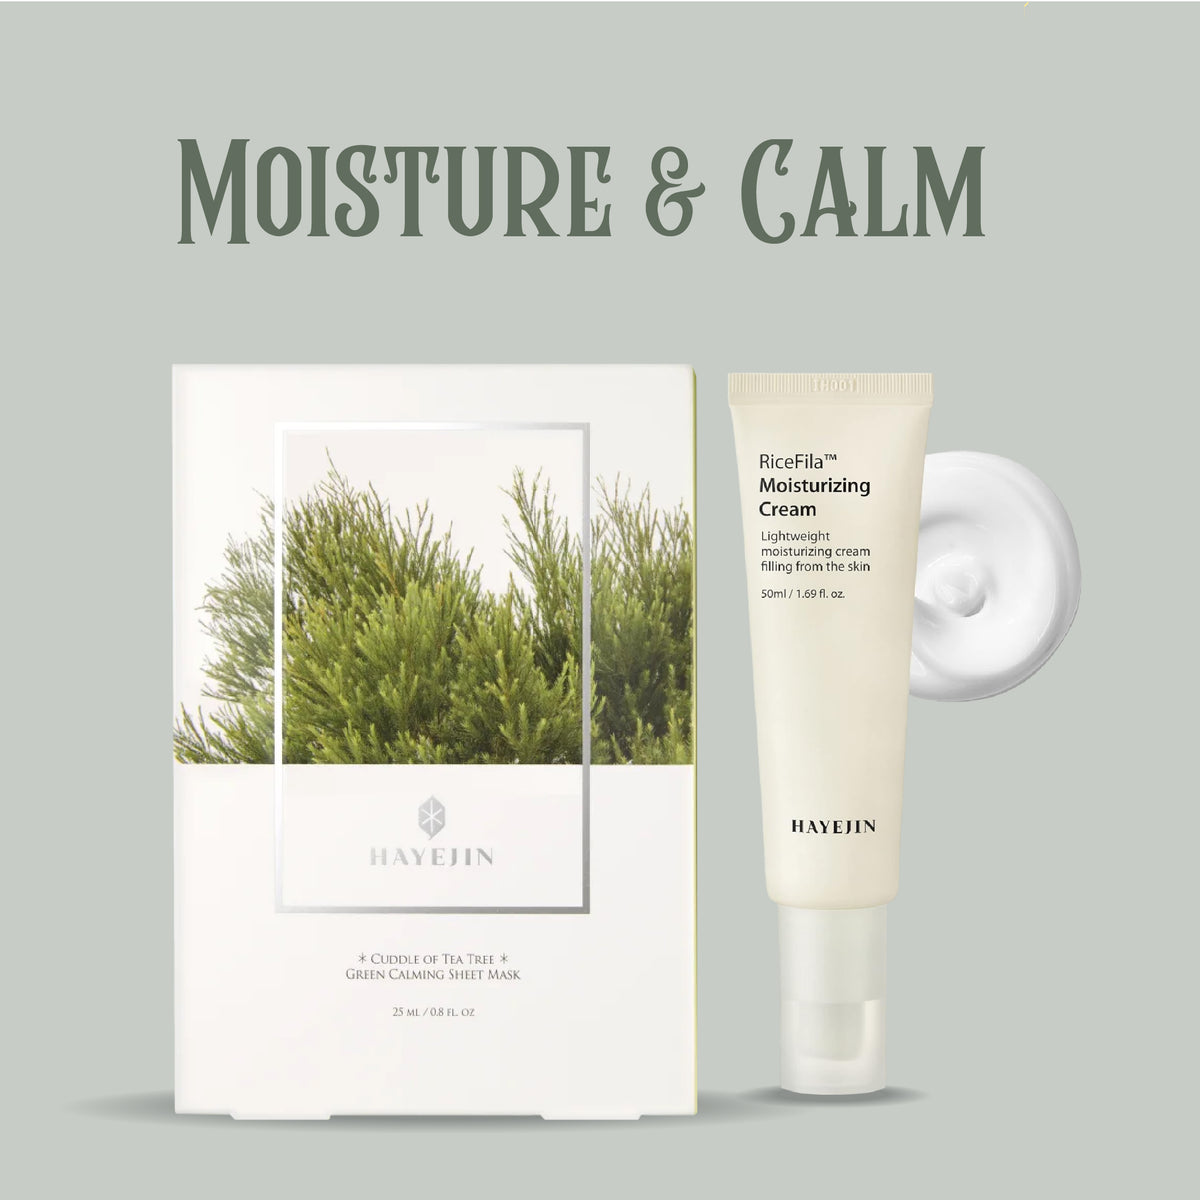 Hayejin RiceFila Facial Moisturizing Cream 50ml and Hayejin Green Calming Sheet Mask 25 ml Combo